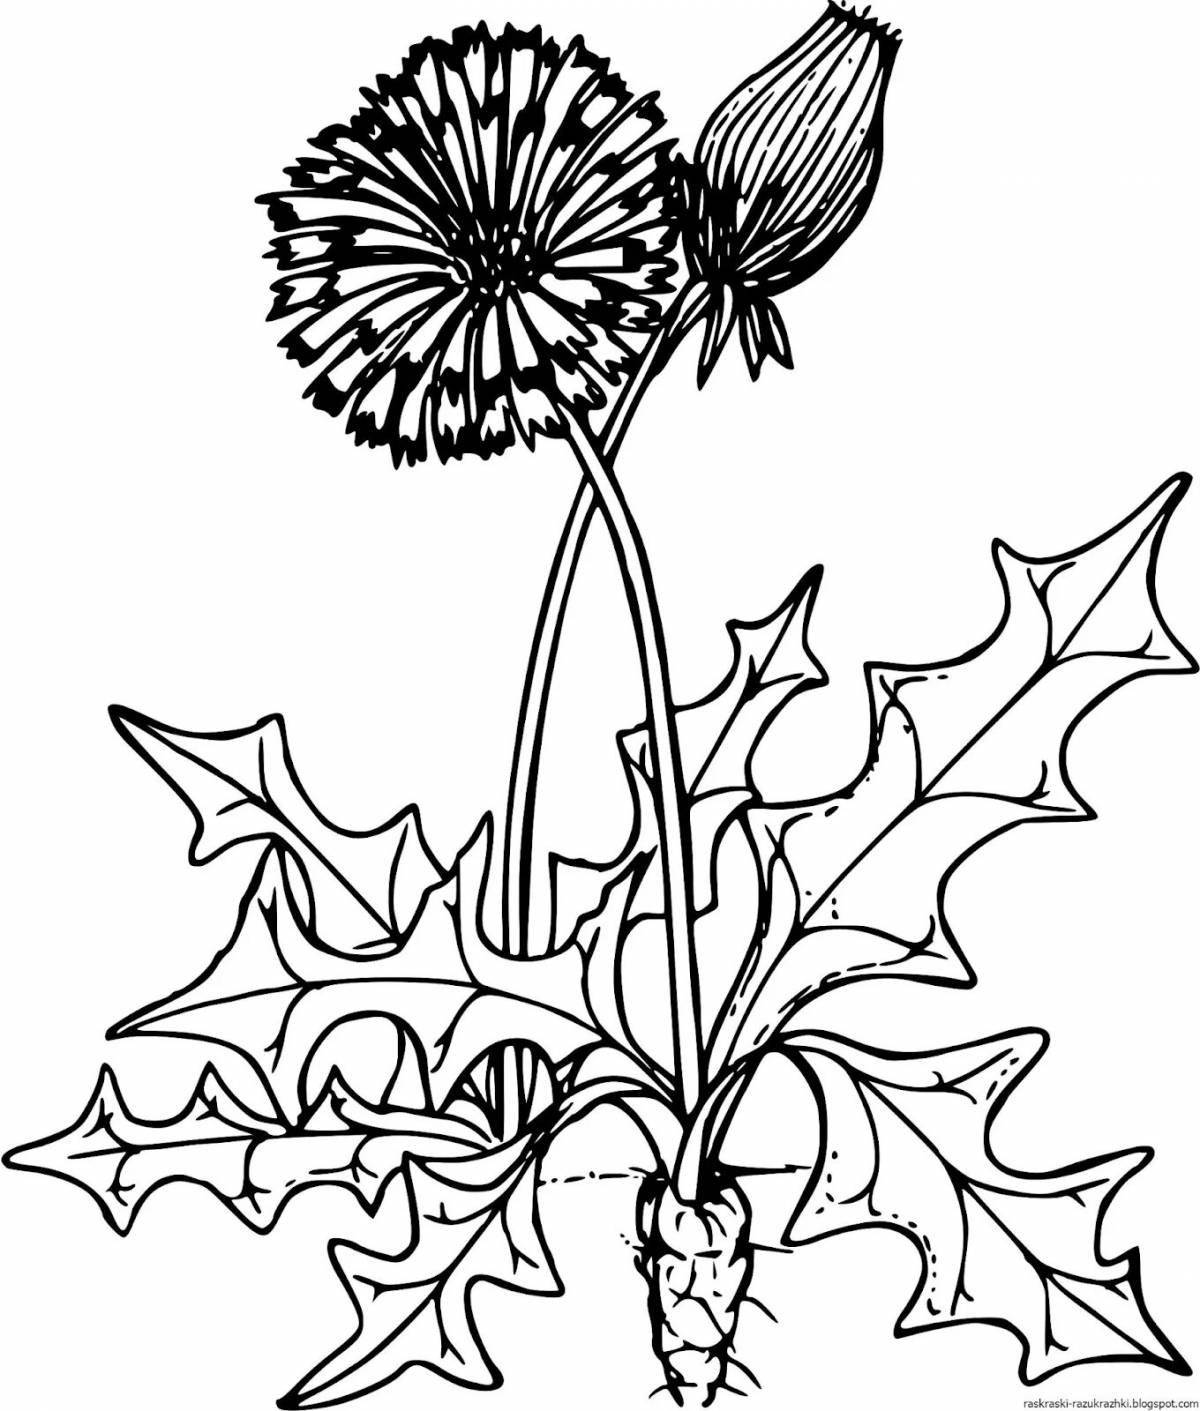 Fancy dandelion coloring book for kids